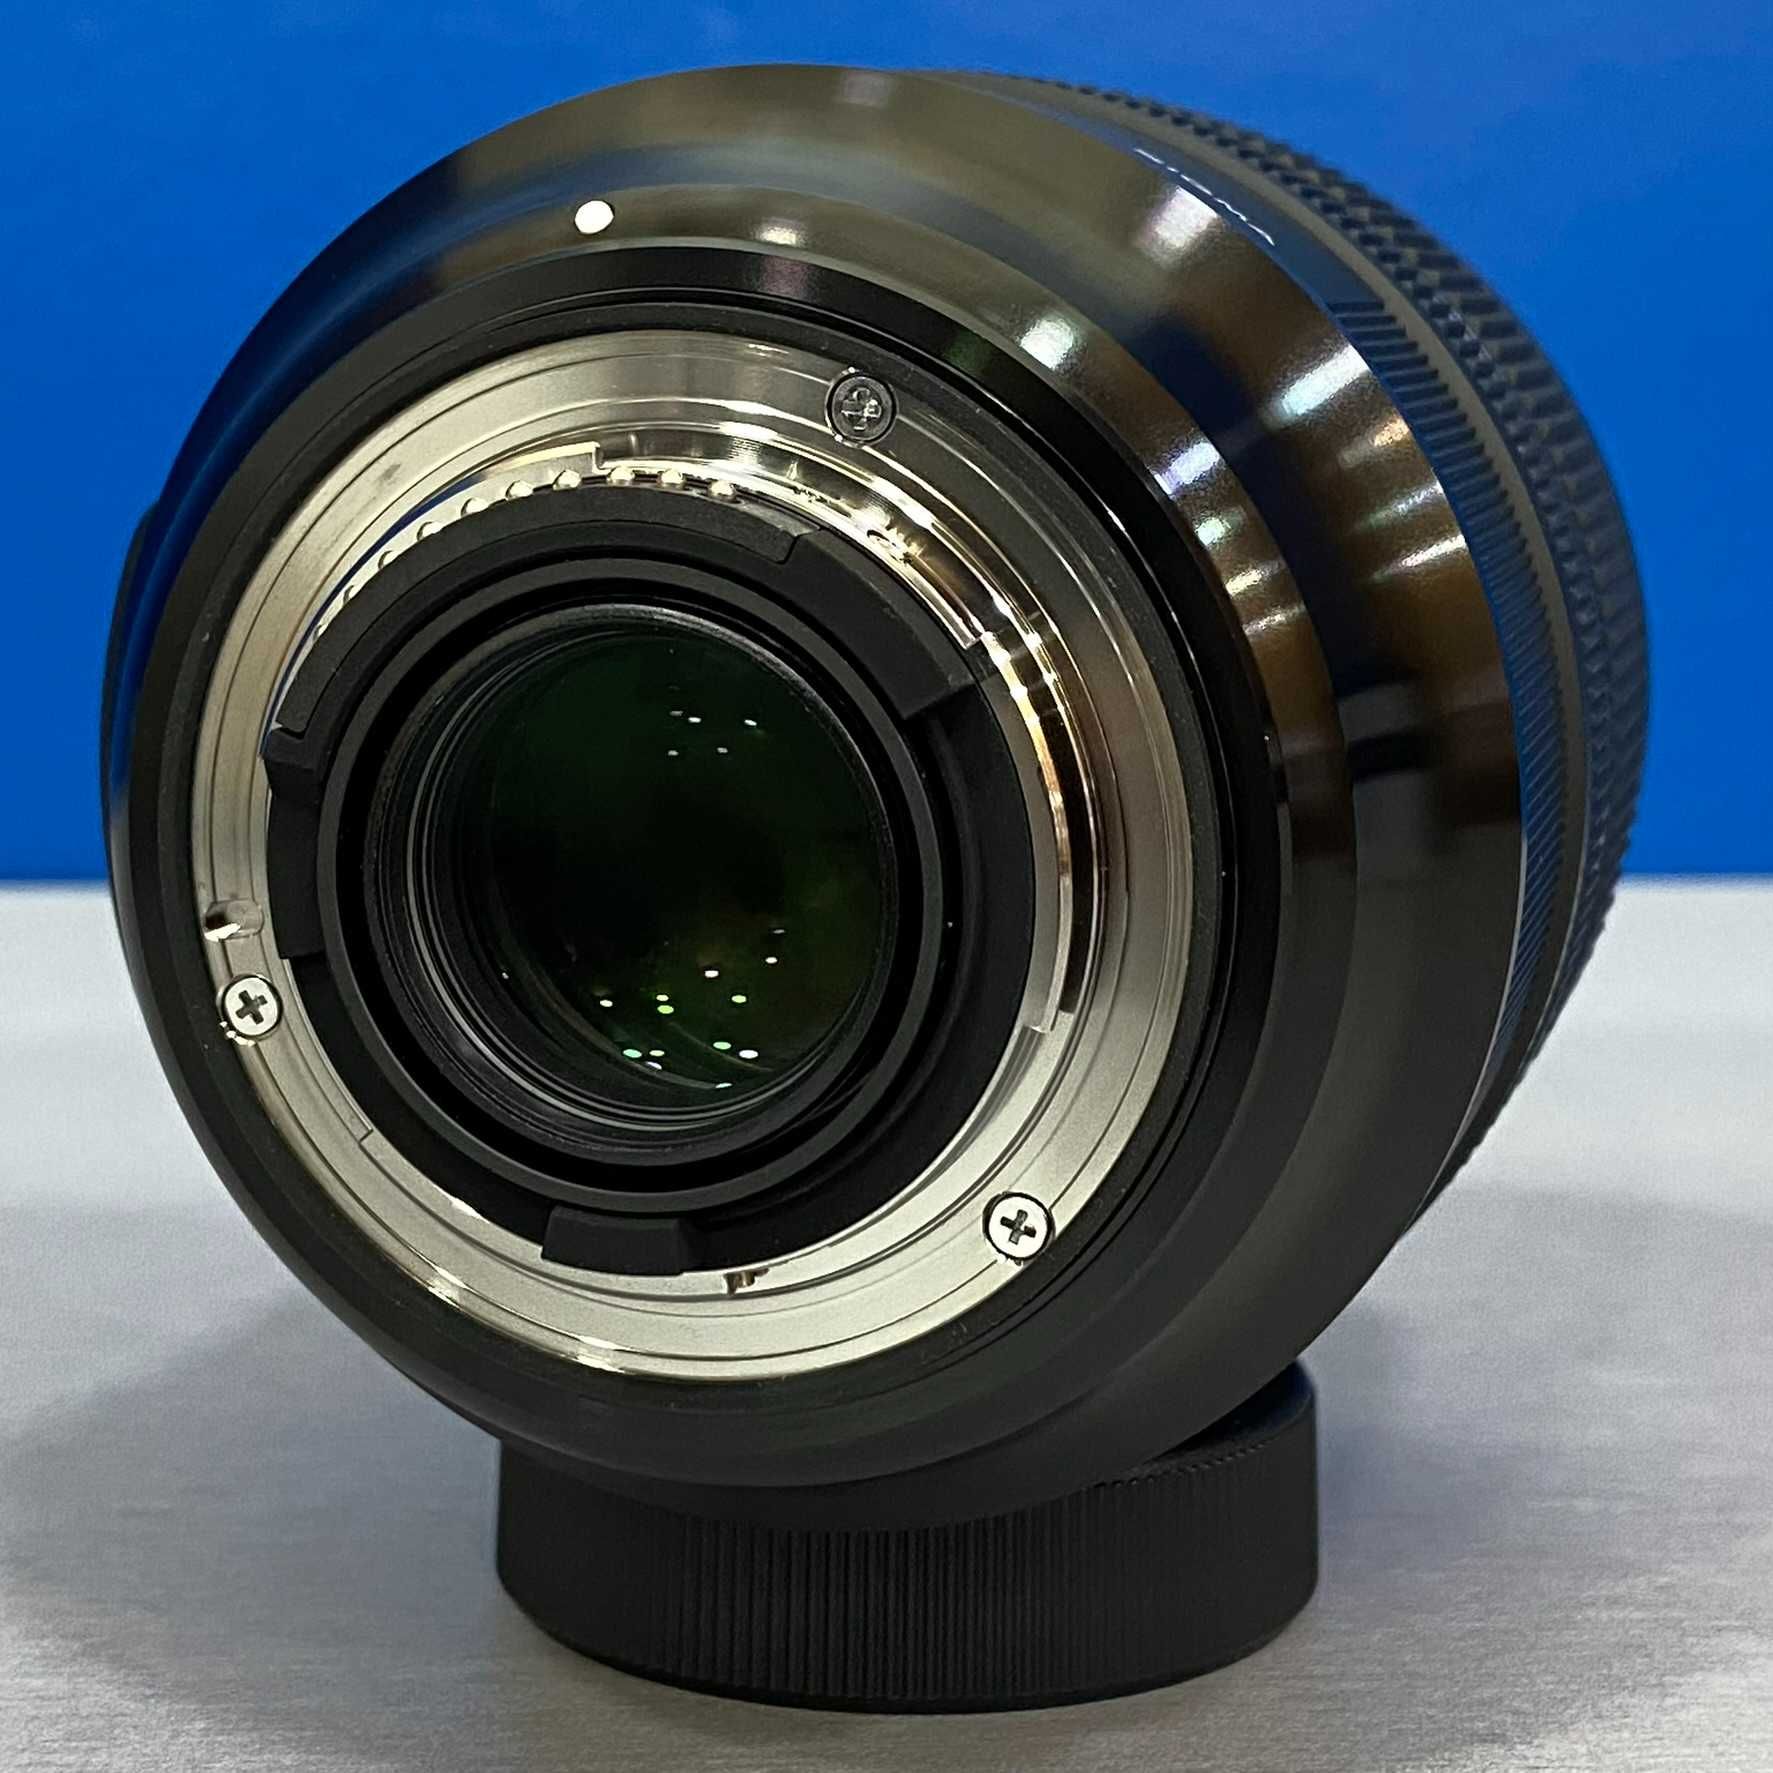 Sigma ART 24-70mm f/2.8 DG OS HSM (Nikon) - 3 ANOS DE GARANTIA